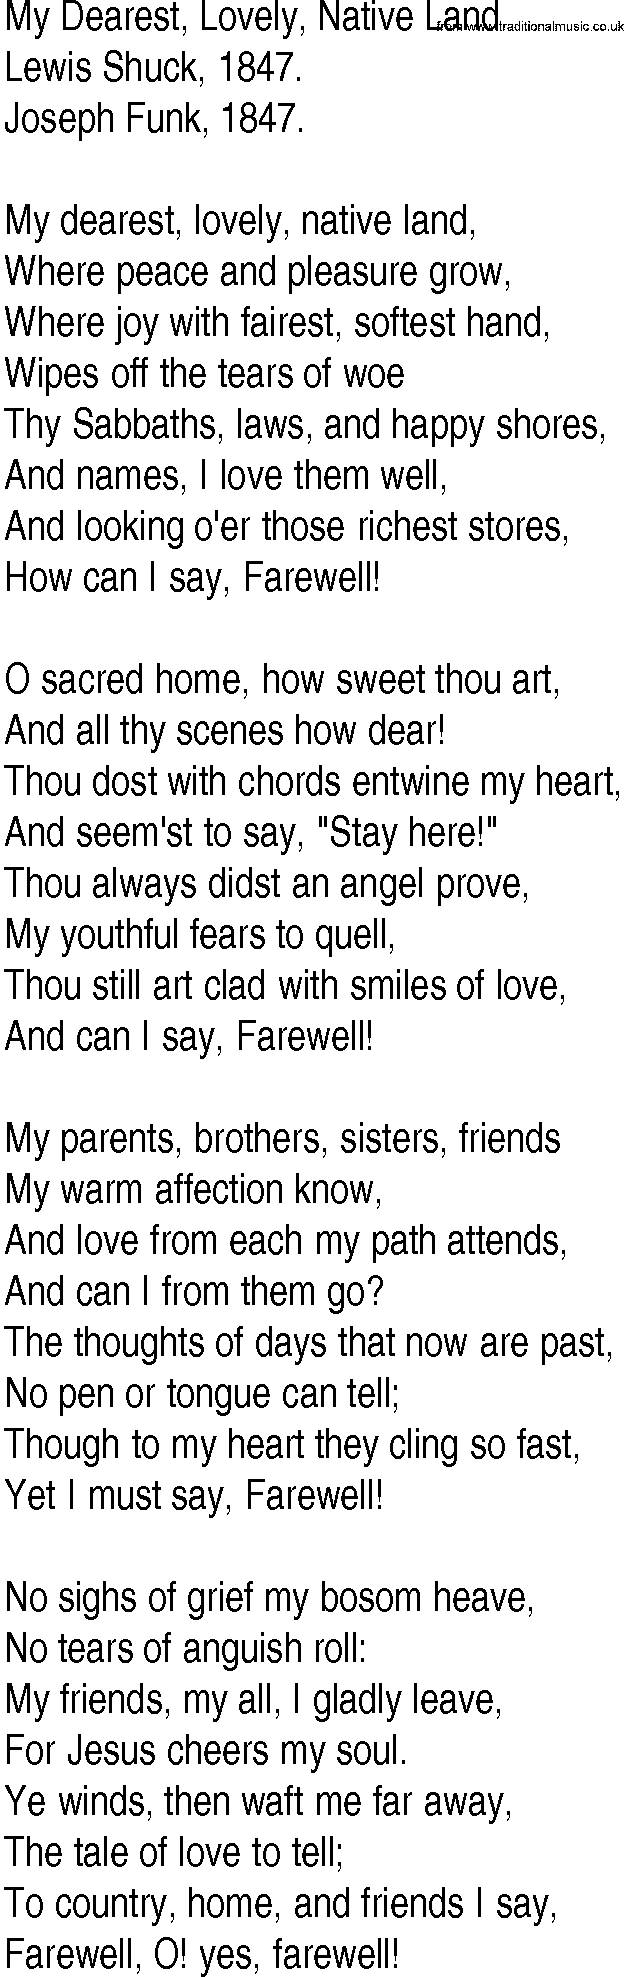 Hymn and Gospel Song: My Dearest, Lovely, Native Land by Lewis Shuck lyrics